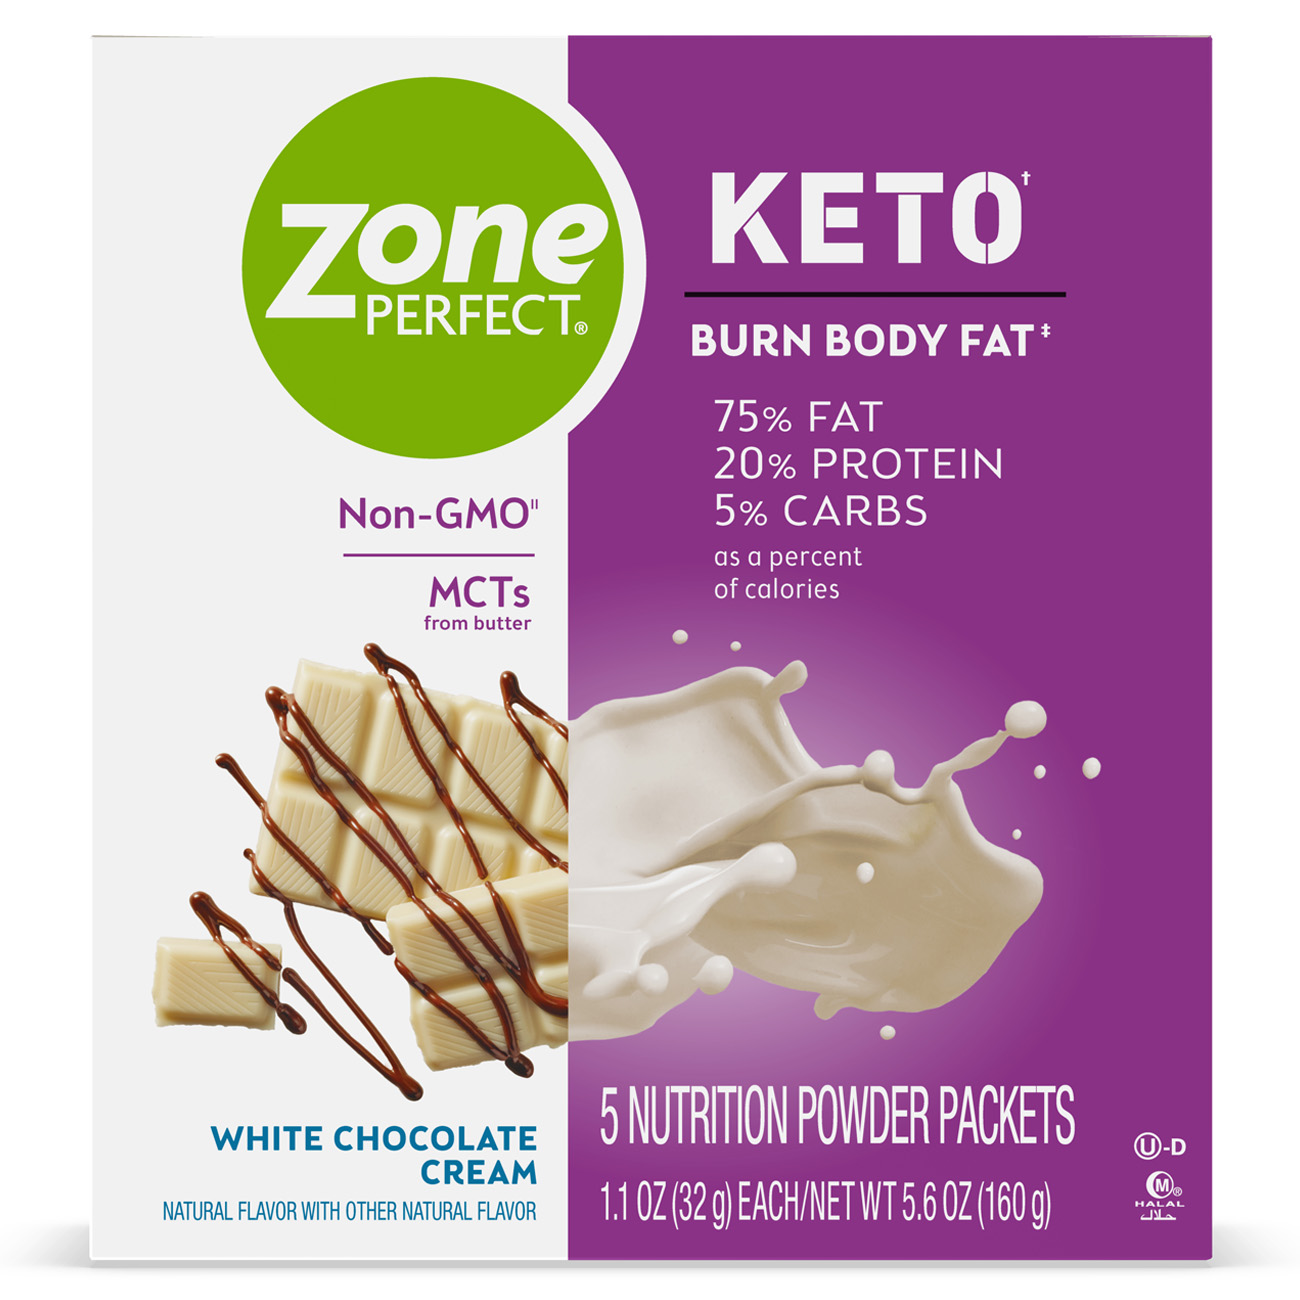 ZonePerfect Keto Powder, True Keto Macros To Burn Body Fat, Made With ...